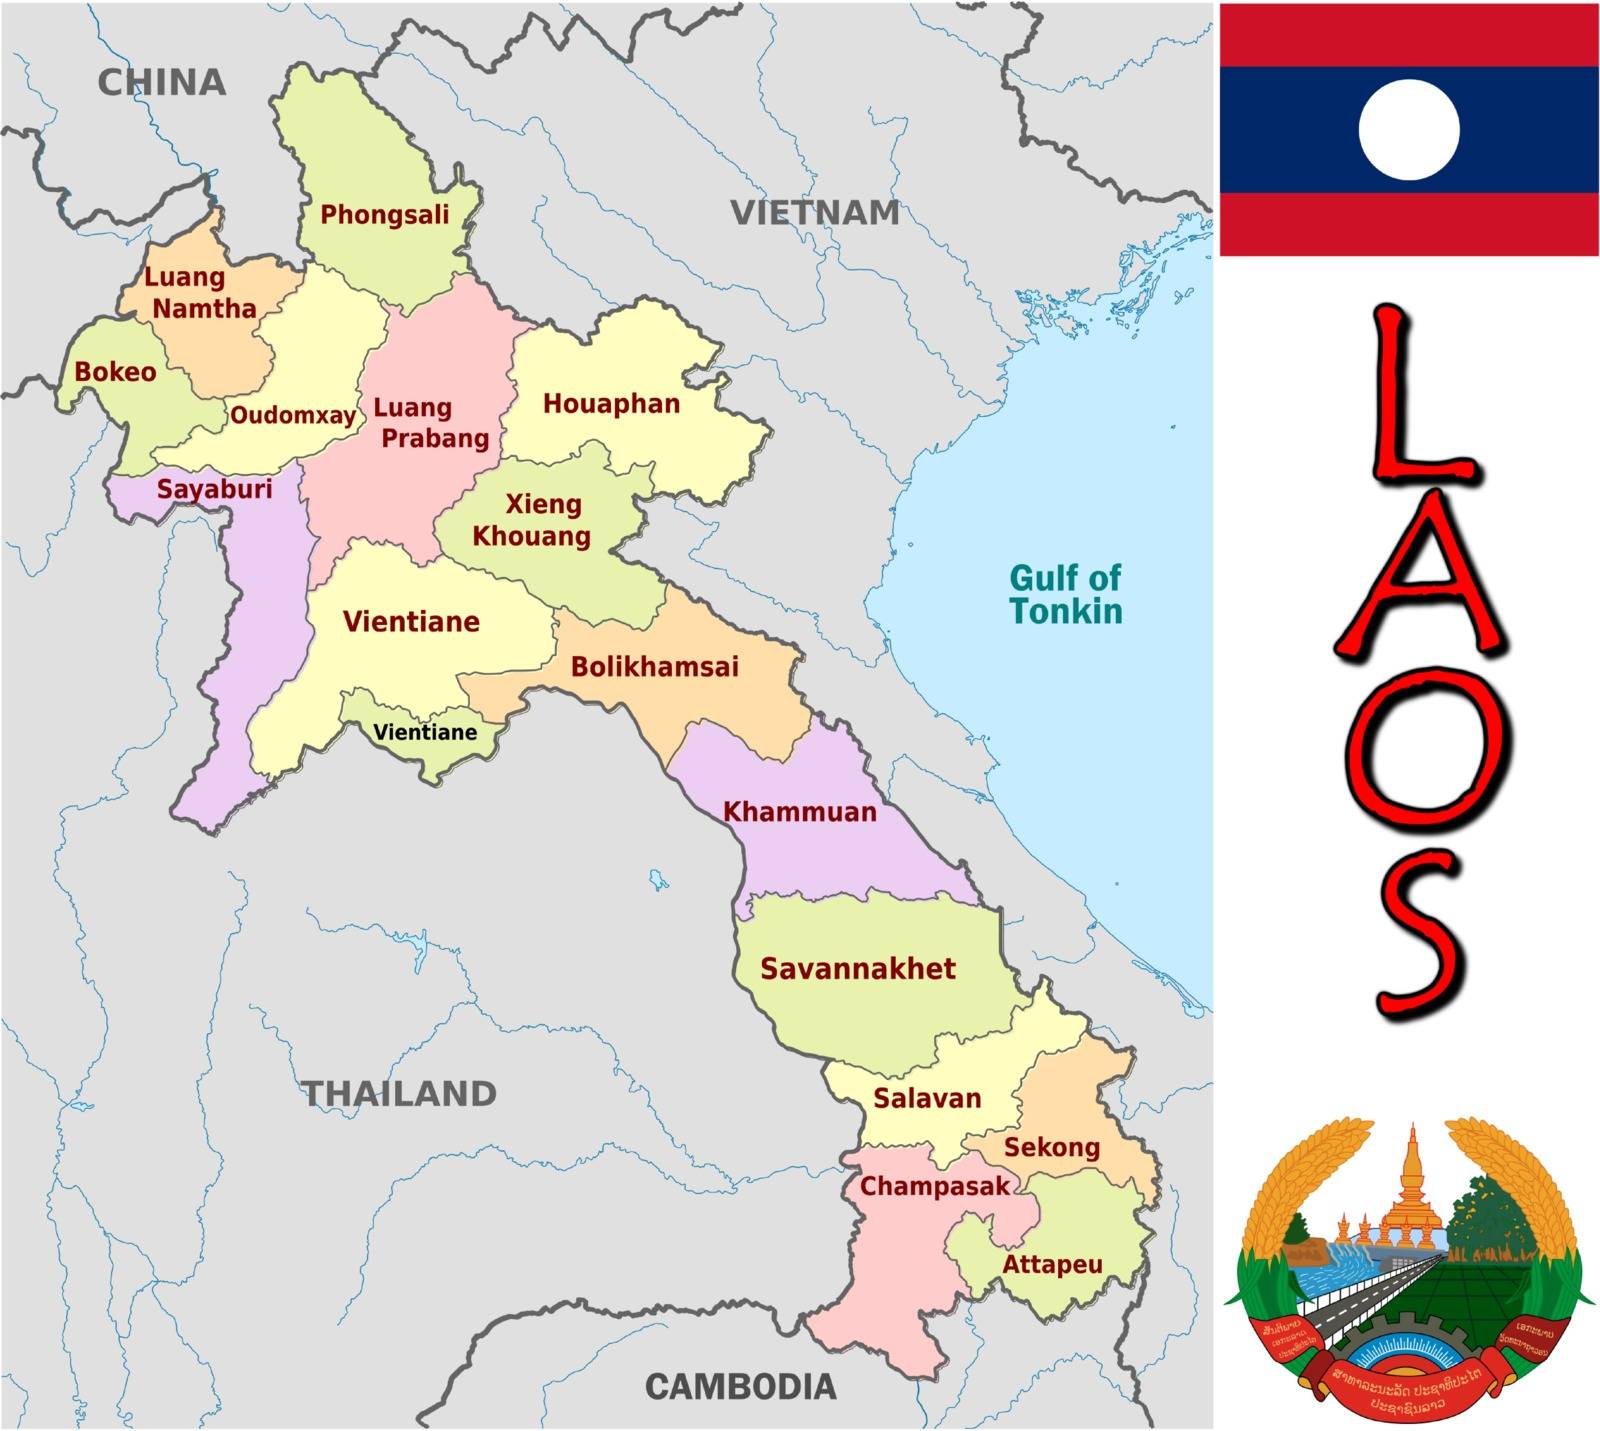 Laos divisions